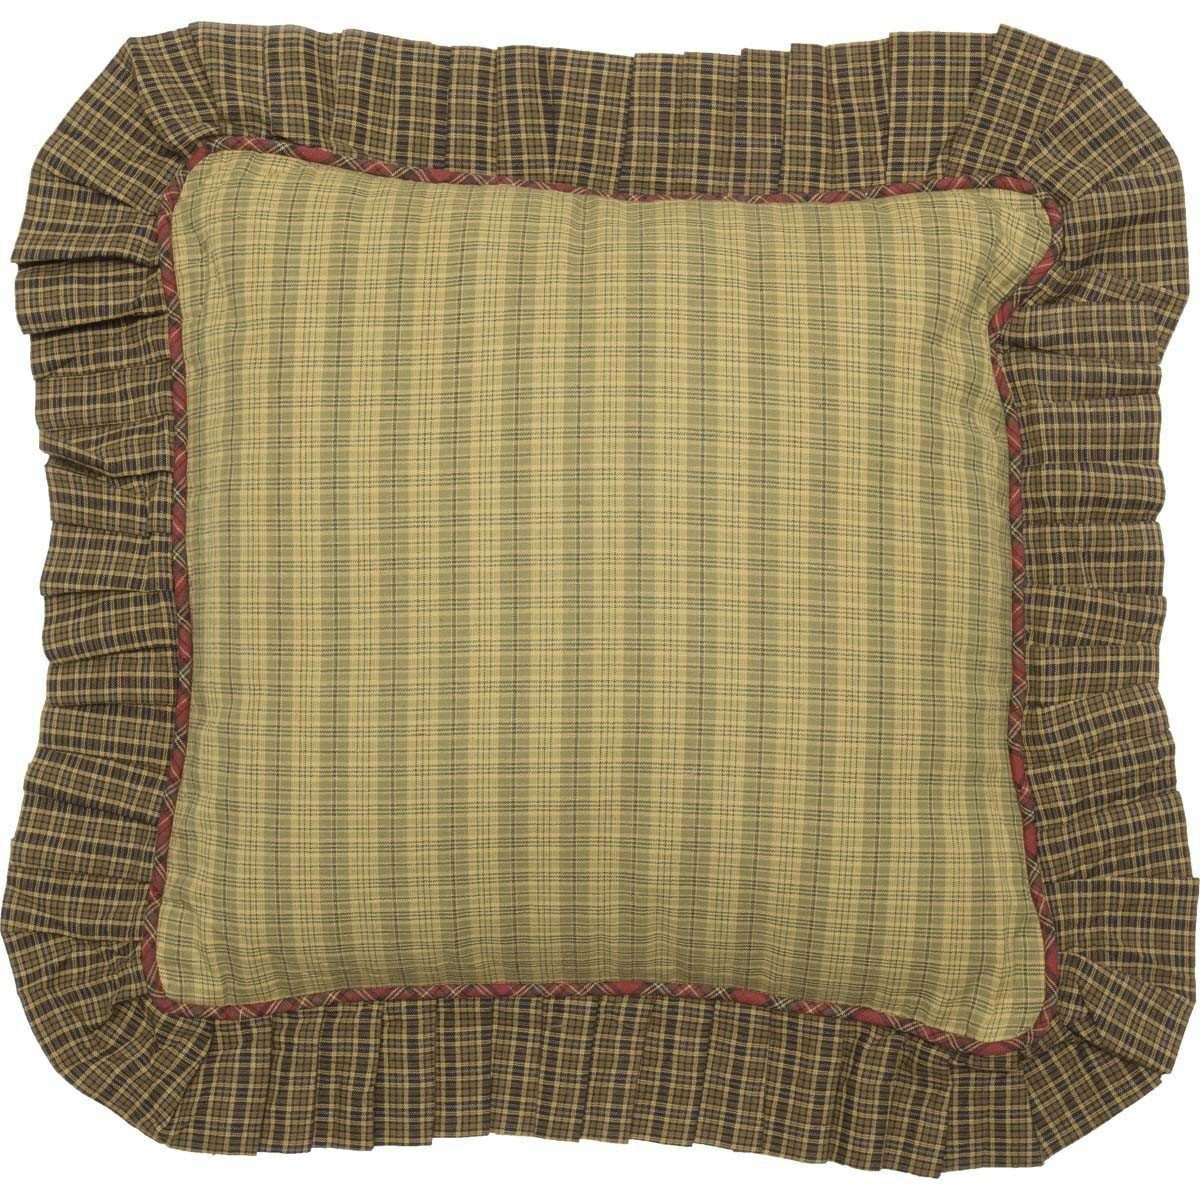 Tea Cabin Fabric Ruffled Pillow 16x16 VHC Brands front